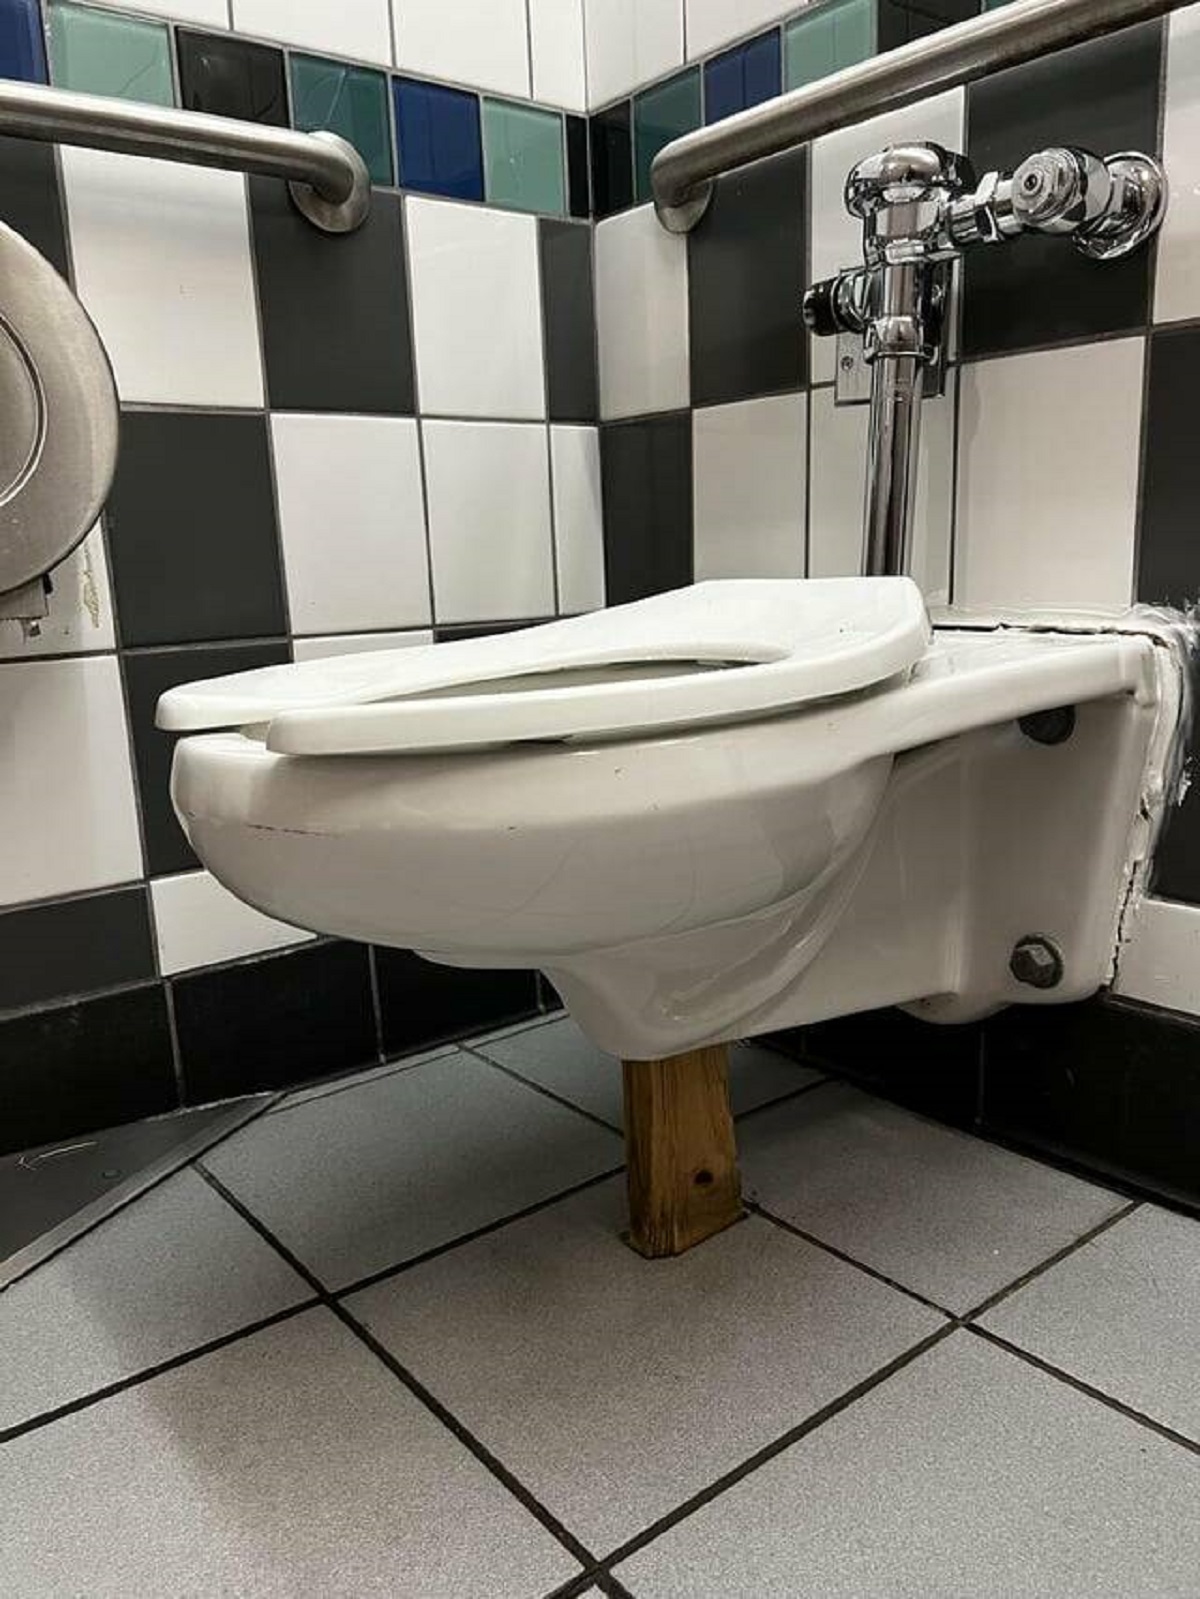 "Toilet at the Columbus International Airport"